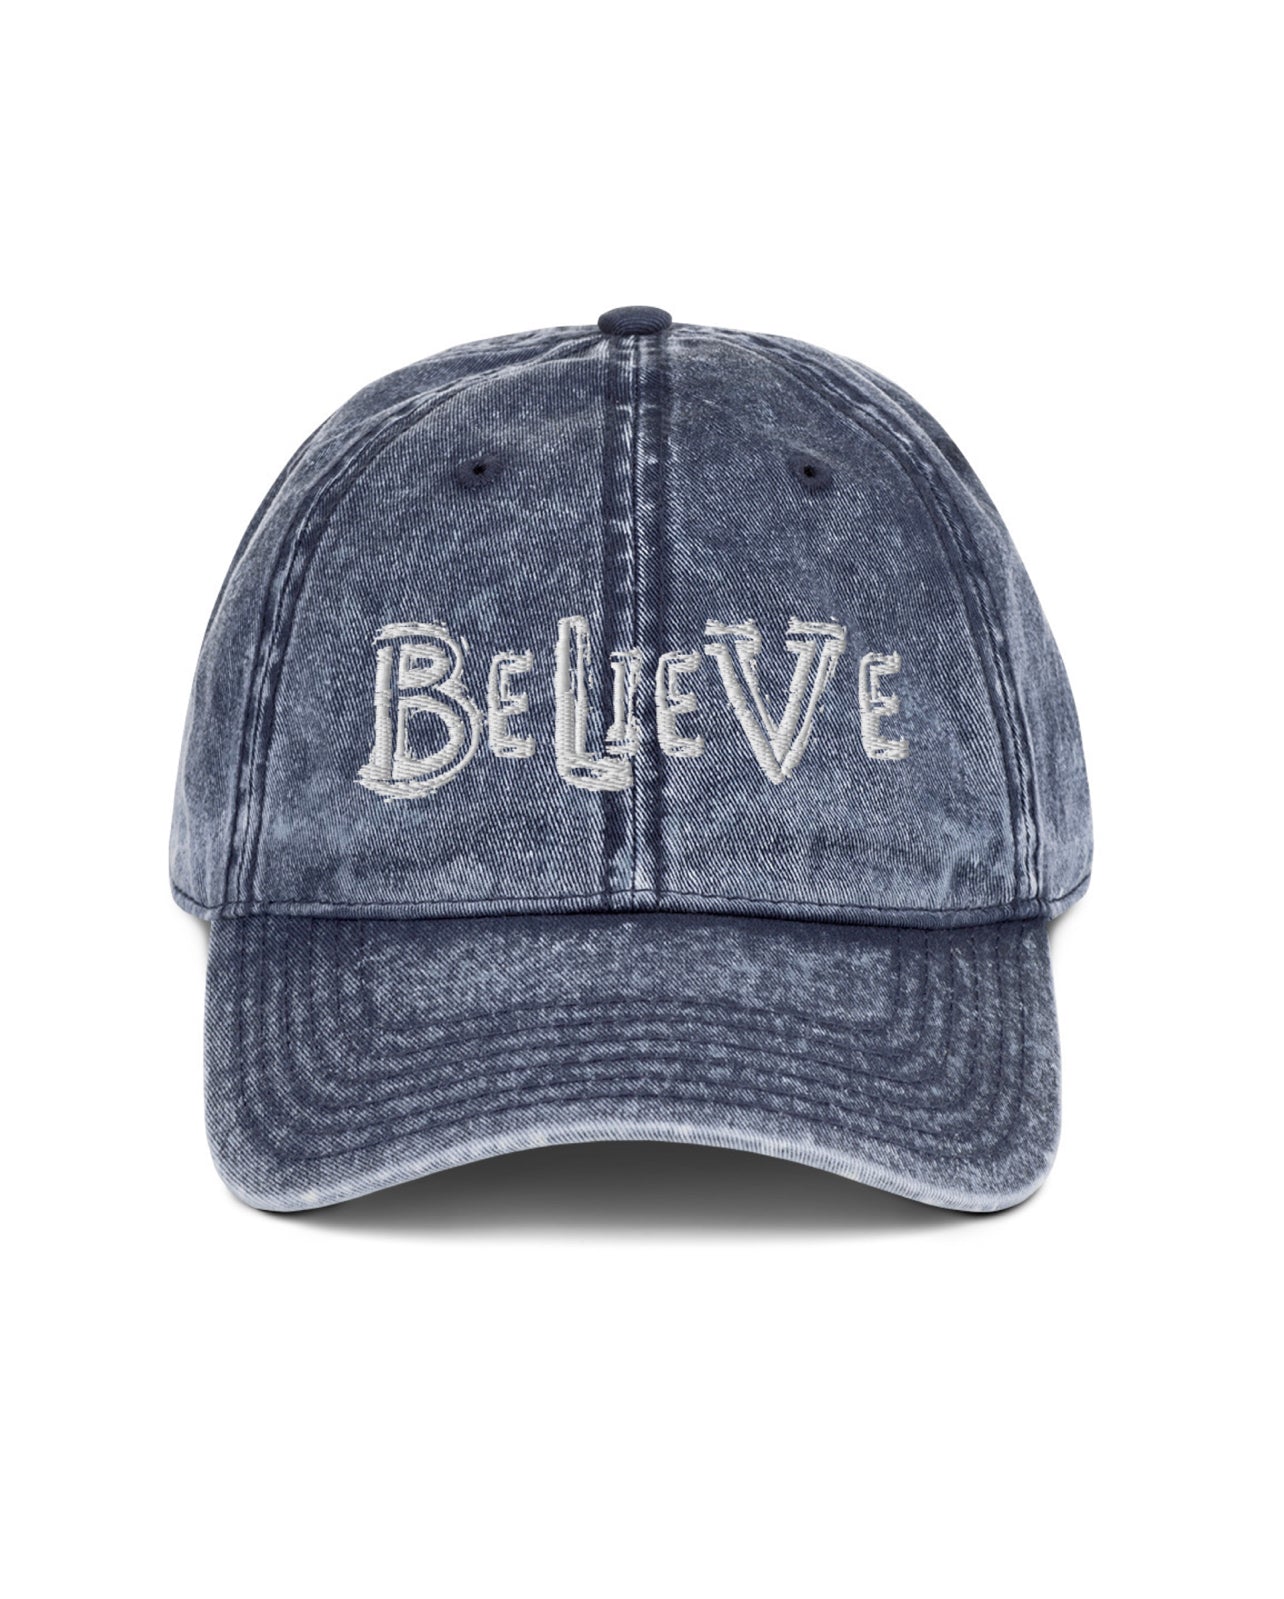 Believe Christian Hat